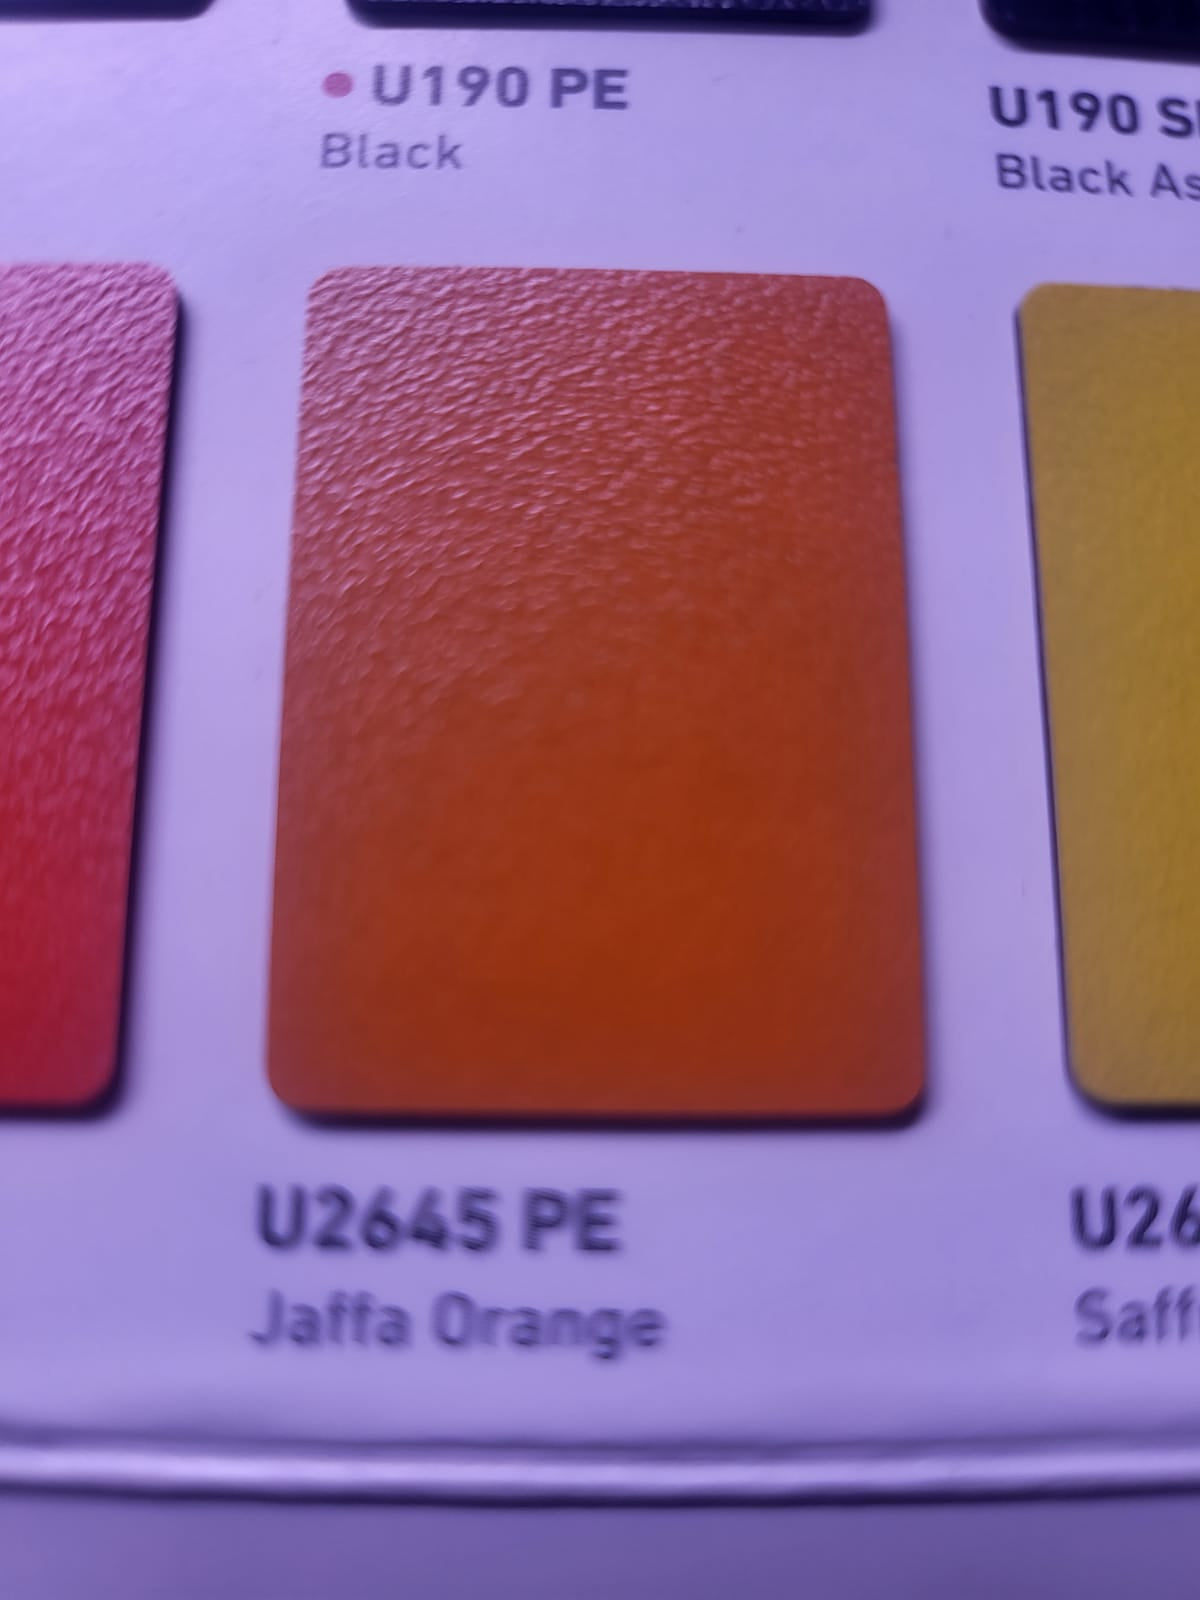 Edging Swiss Krono U2645 PE MFC 1mm Jaffa Orange ABS